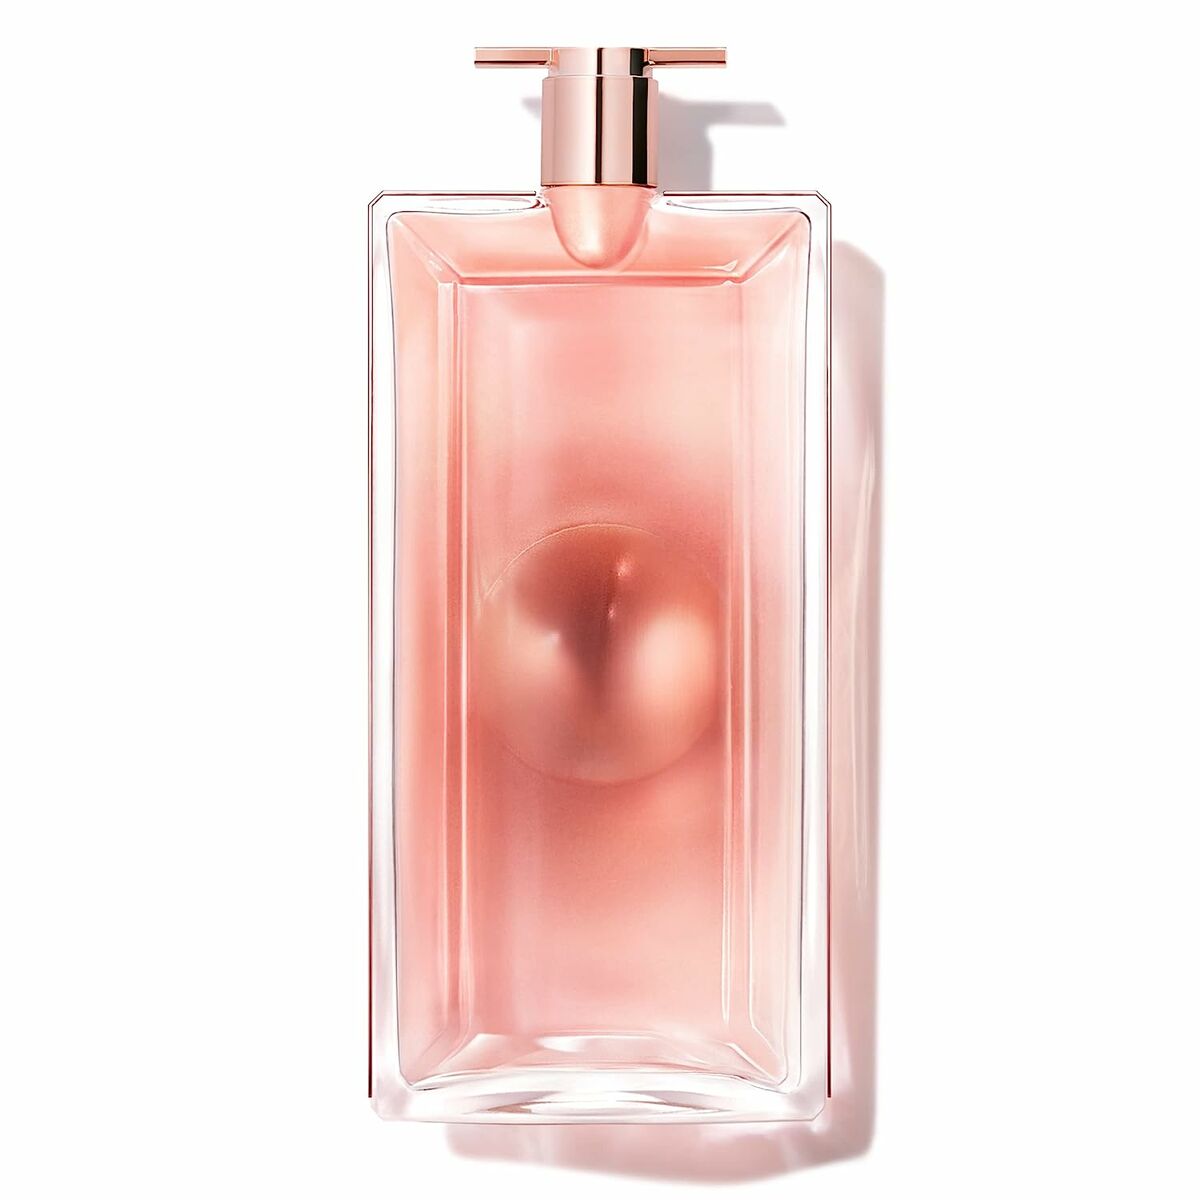 Perfume Mujer Lancôme EDP Idole Aura 100 ml